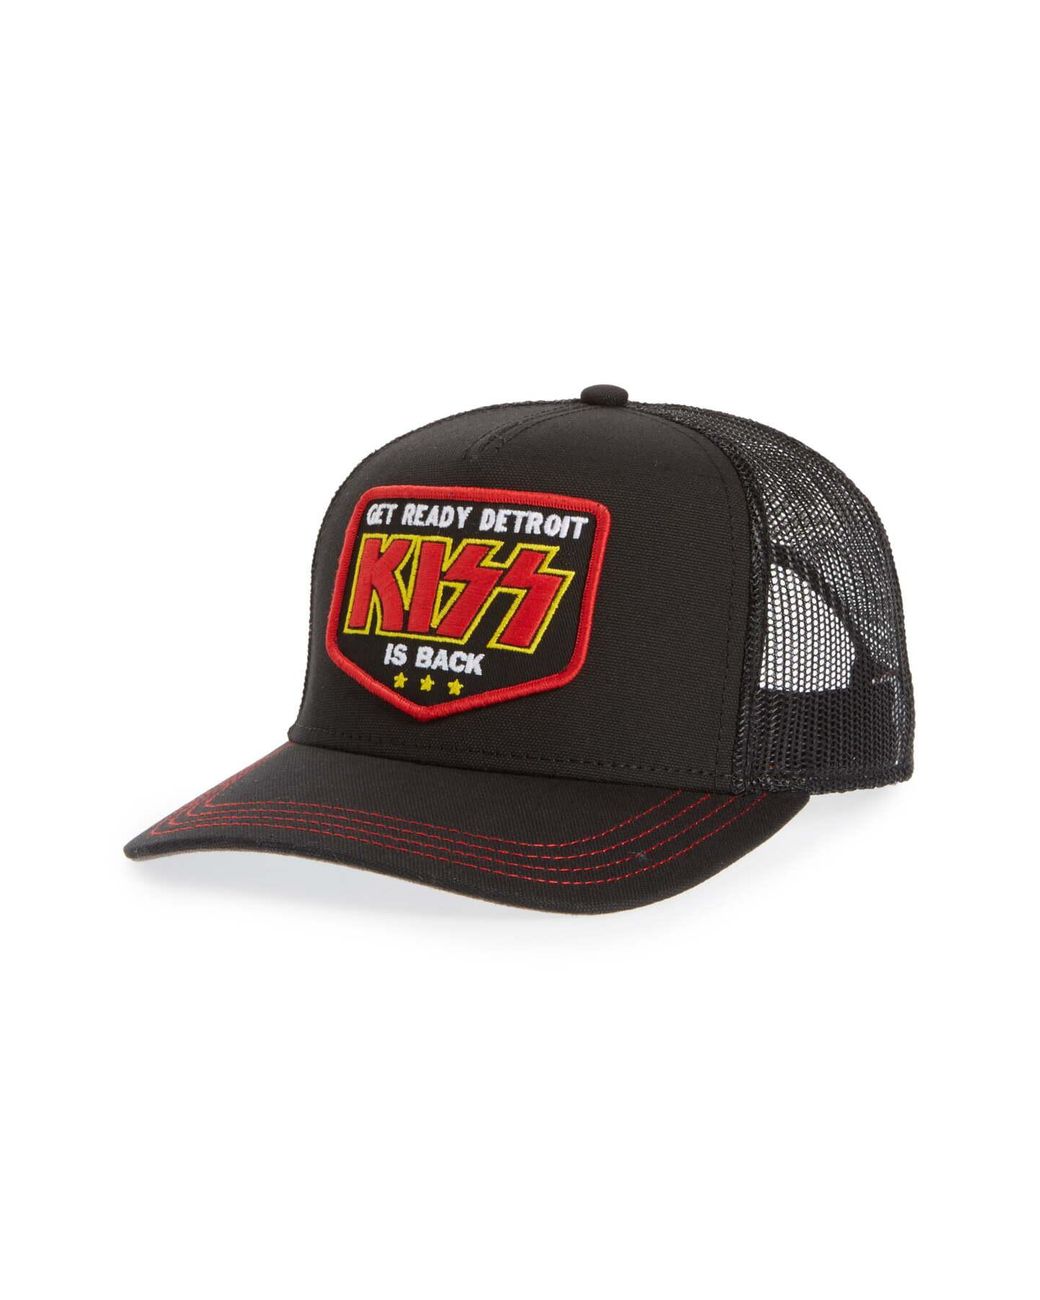 American Needle Valin Kiss Trucker Hat in Black for Men - Lyst